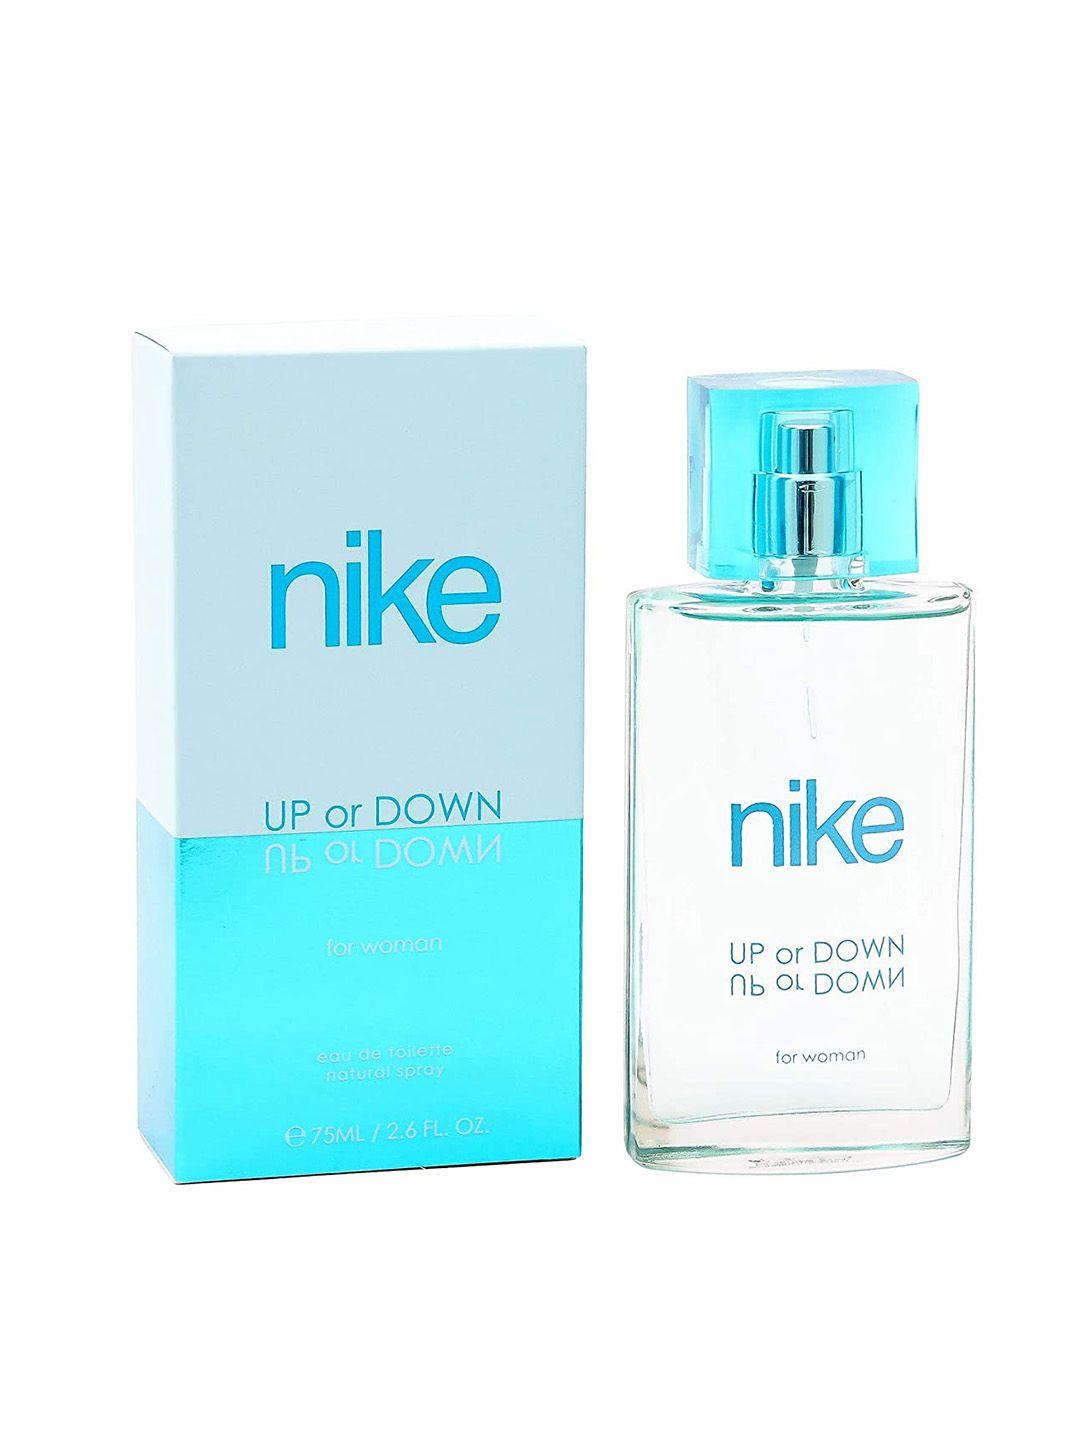 nike woman up or down eau de toilette perfume - 75 ml